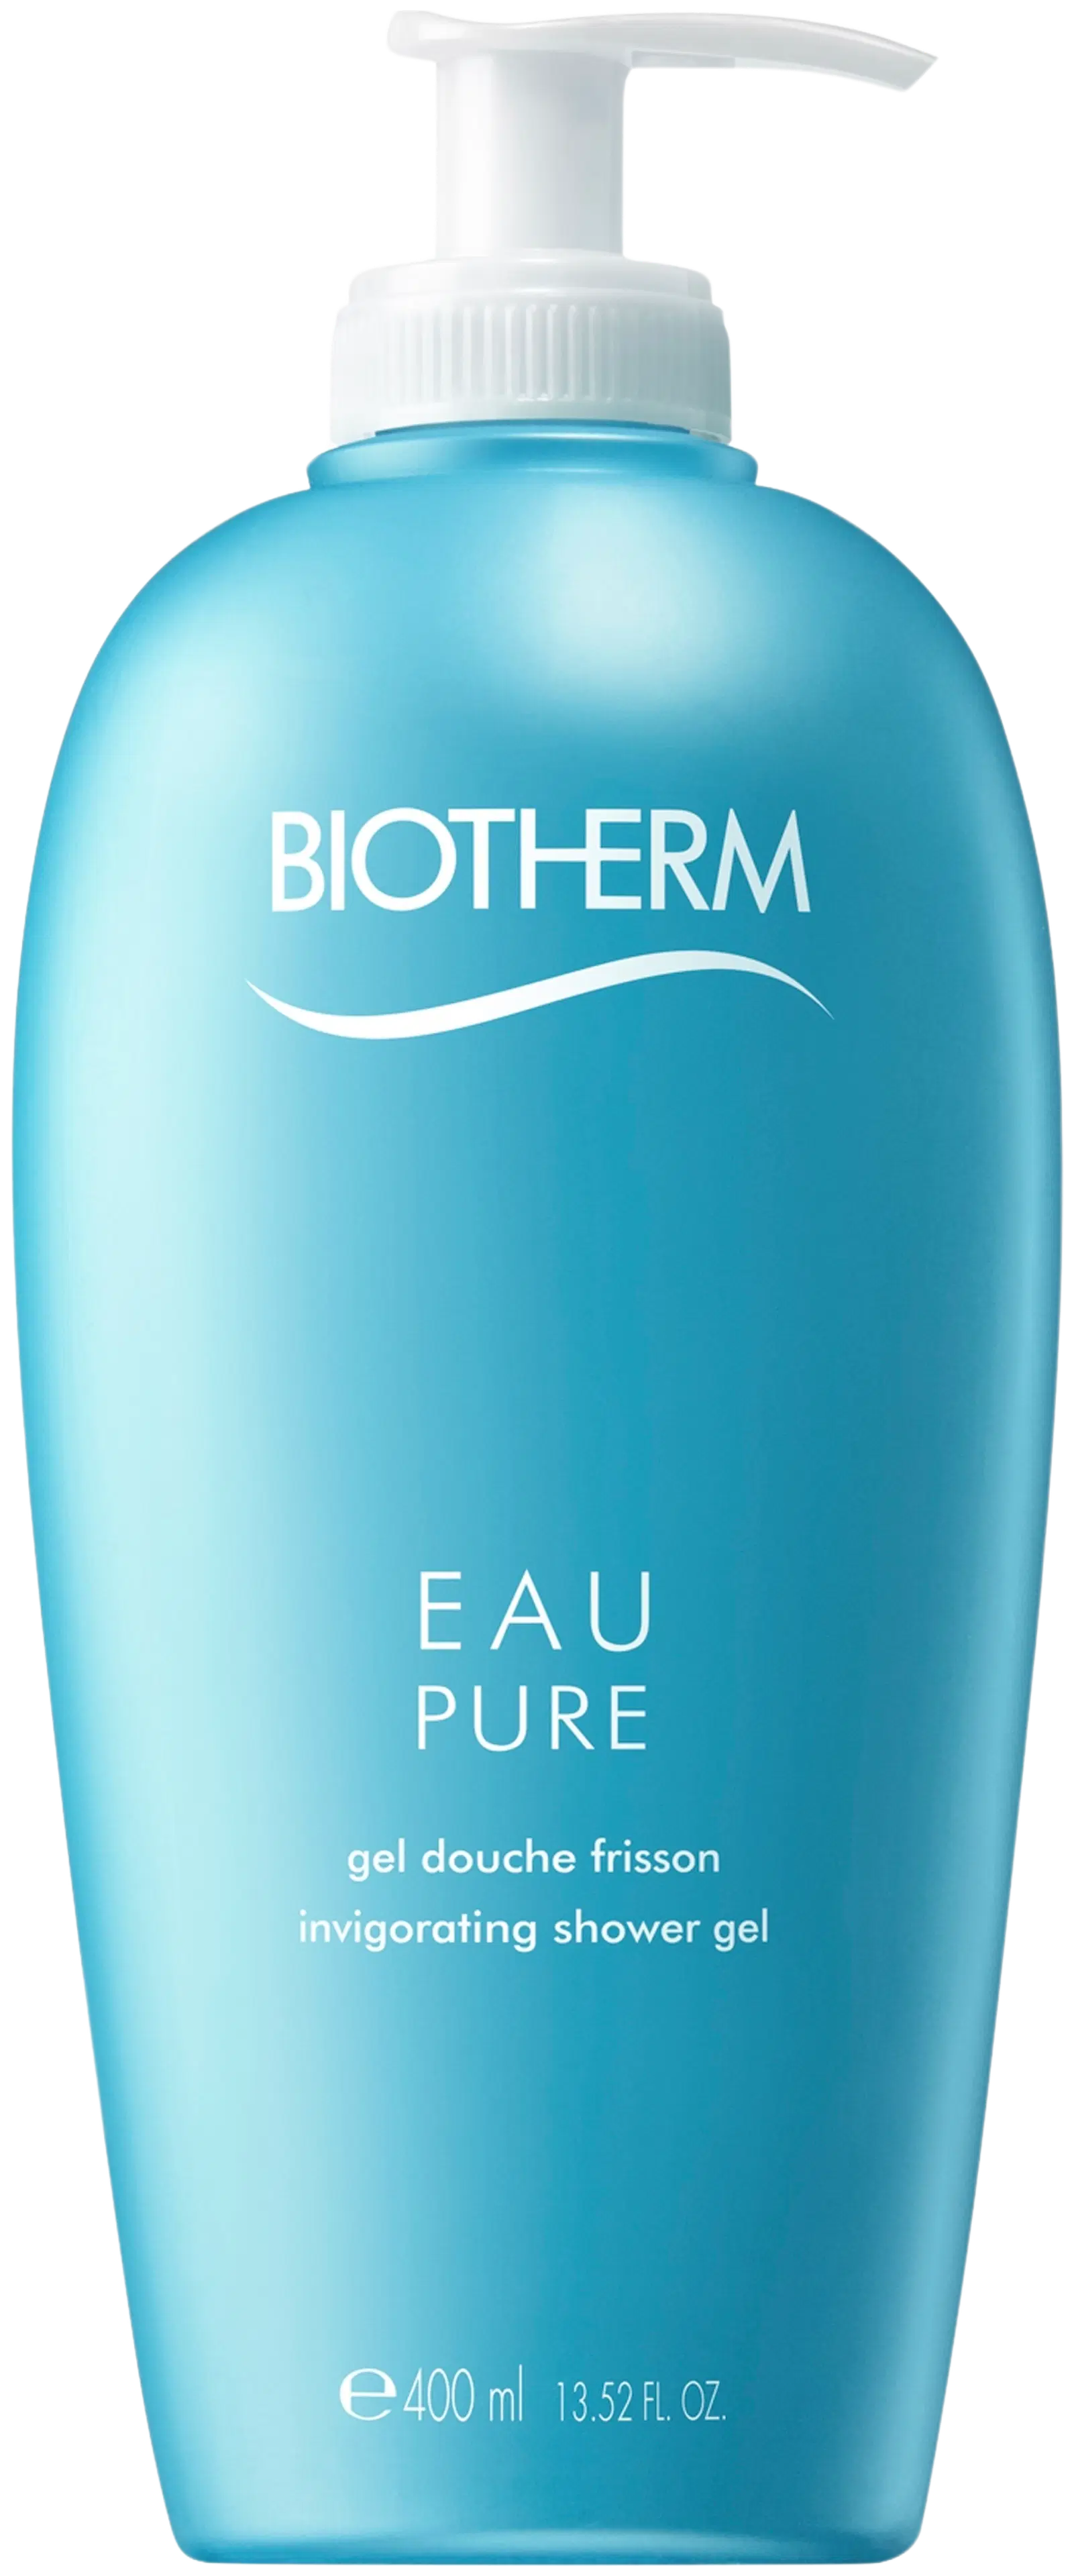 Biotherm Eau Pure Shower Gel suihkugeeli 400 ml